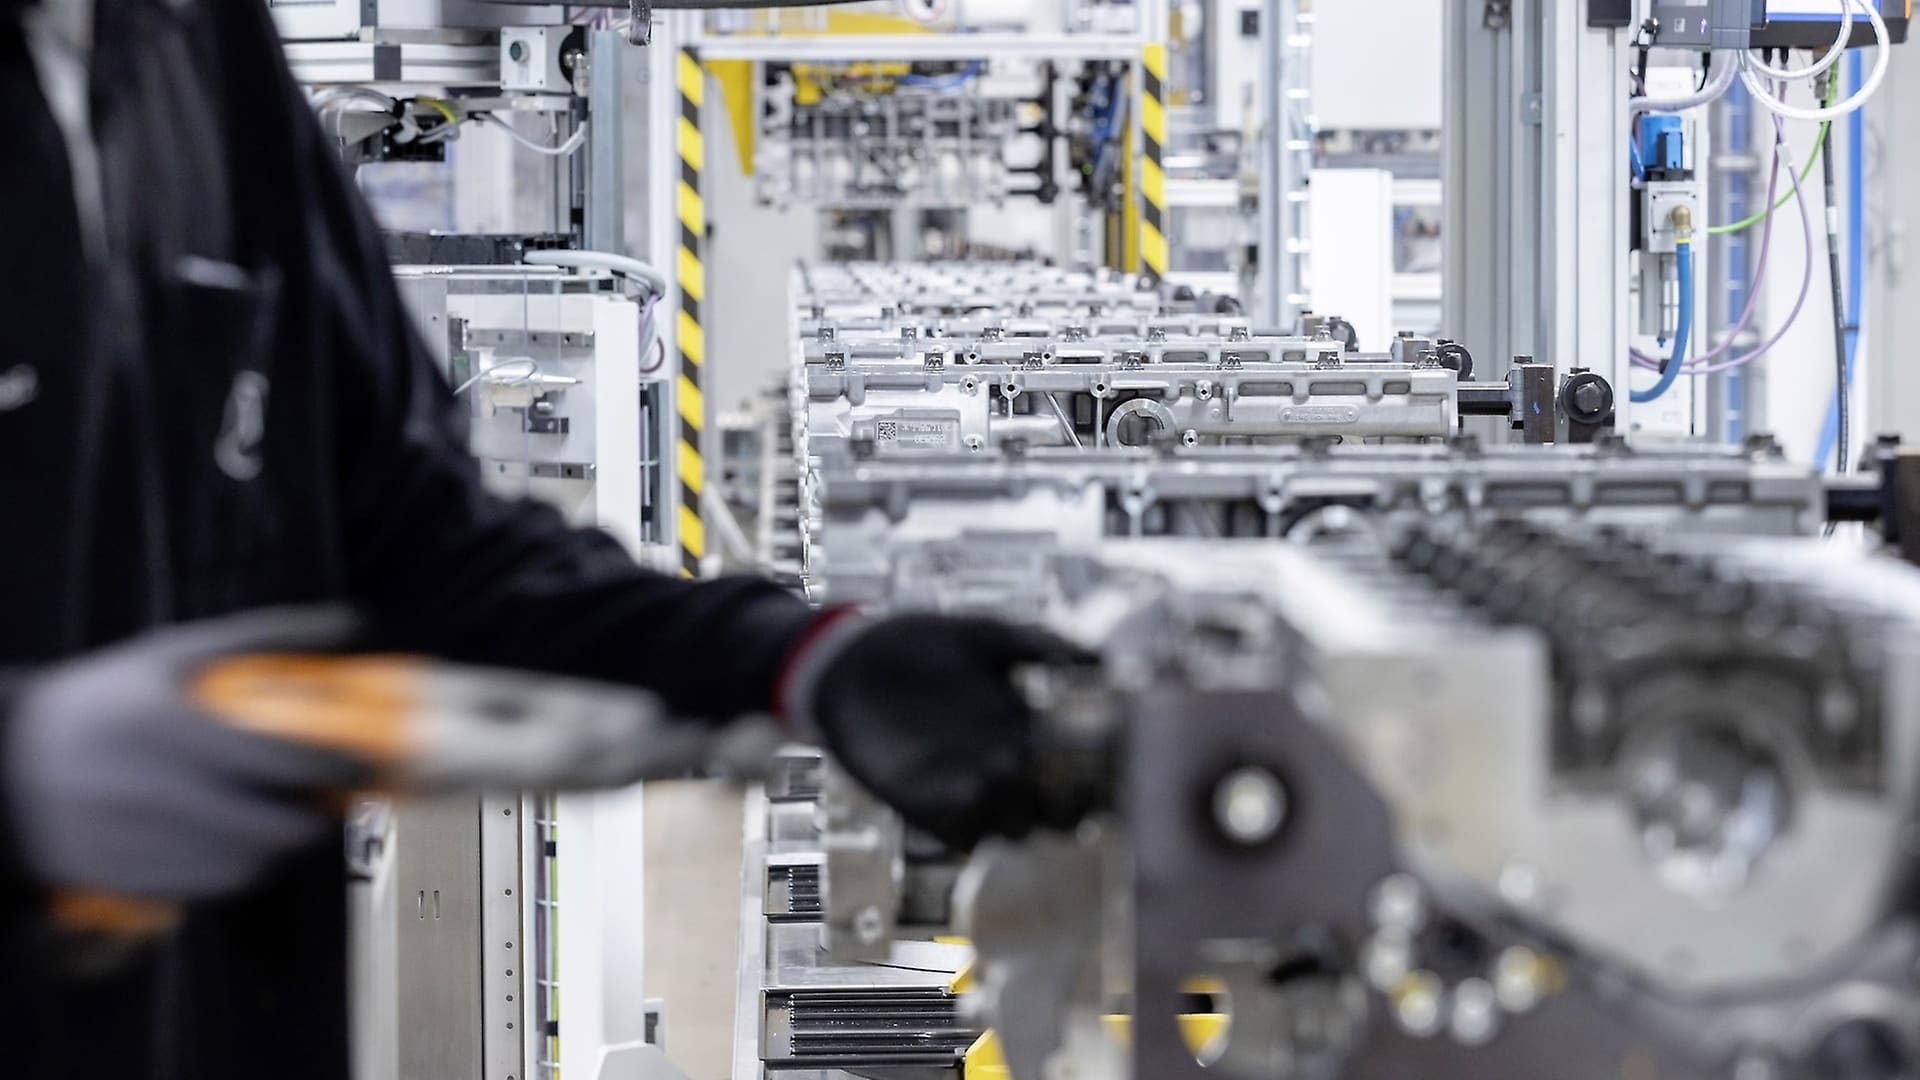 A glimpse into engine assembly at the Mercedes-Benz plant Untertürkheim (Bad Cannstatt part).